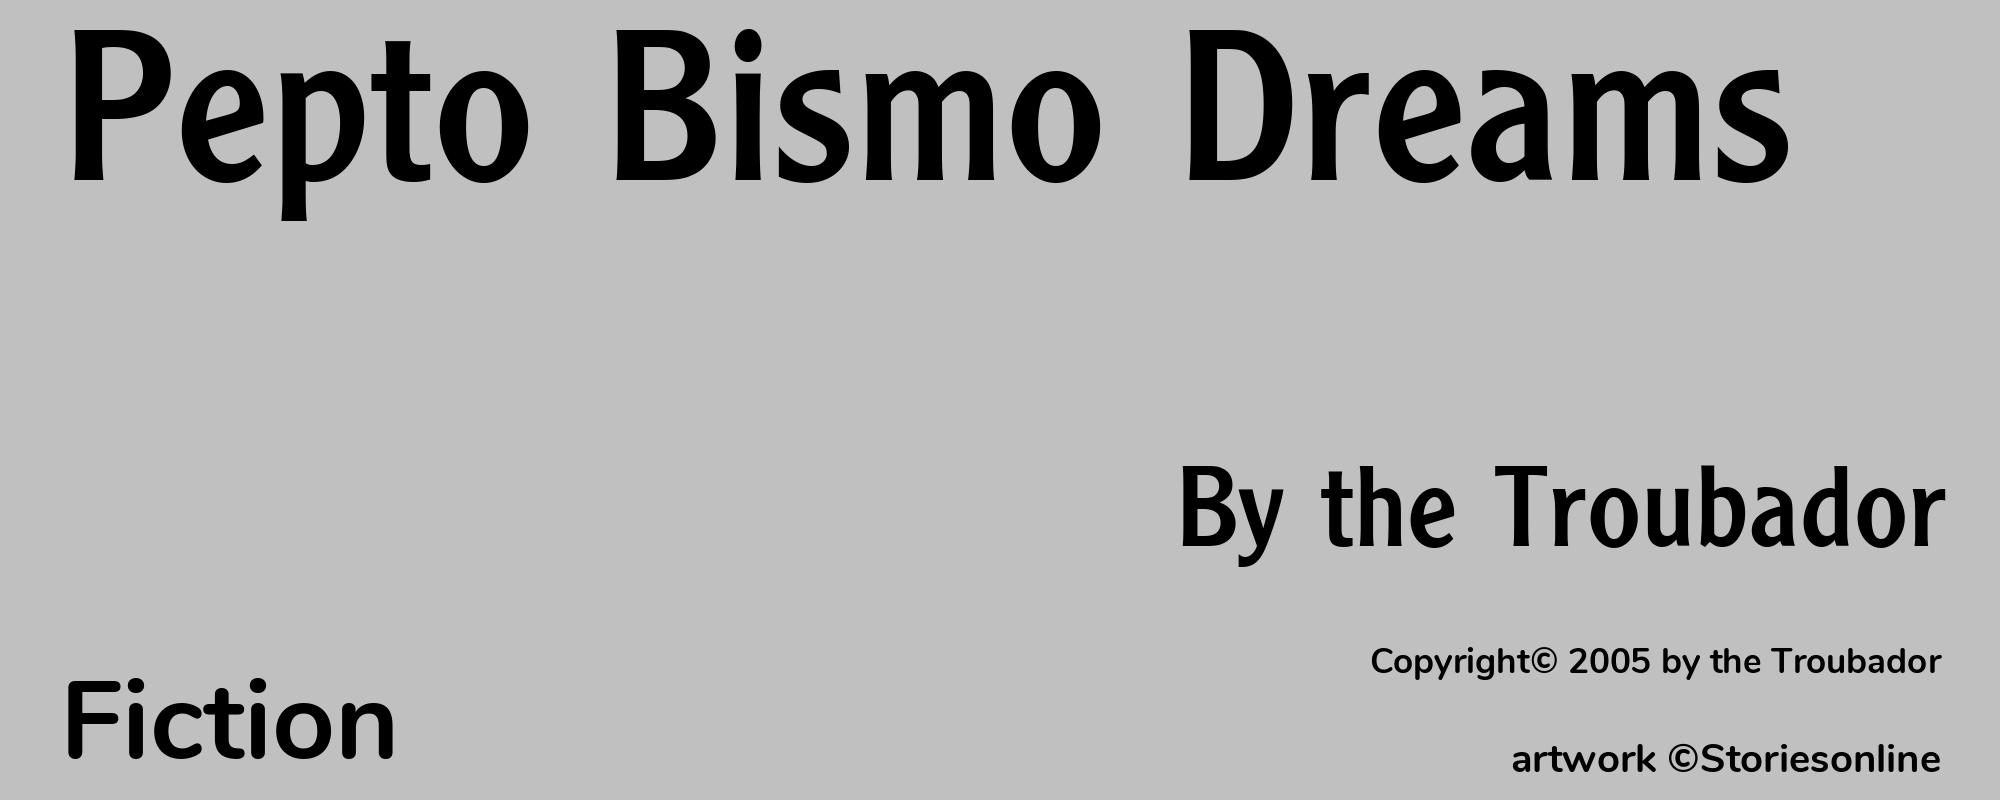 Pepto Bismo Dreams - Cover